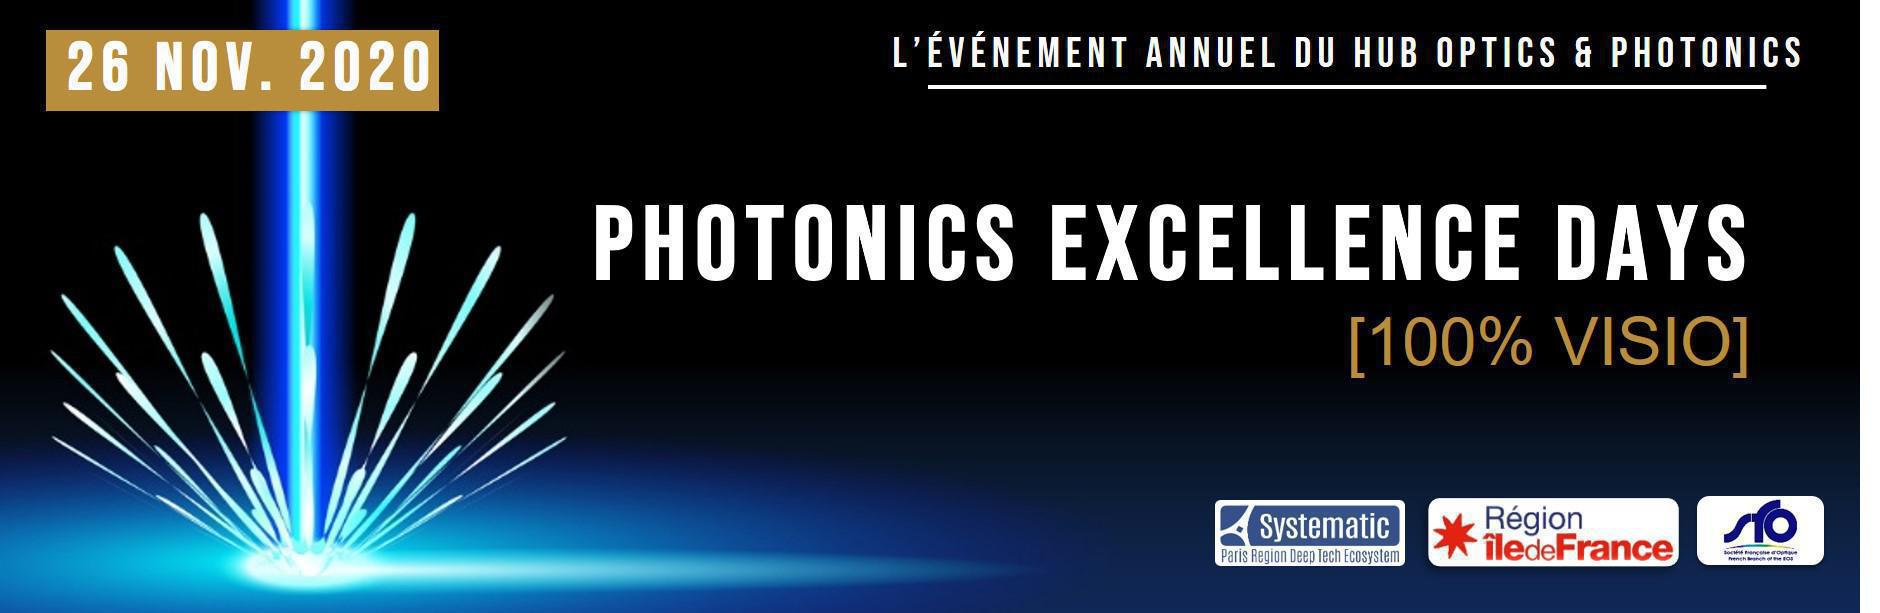 Photonics Excellence Days 2020